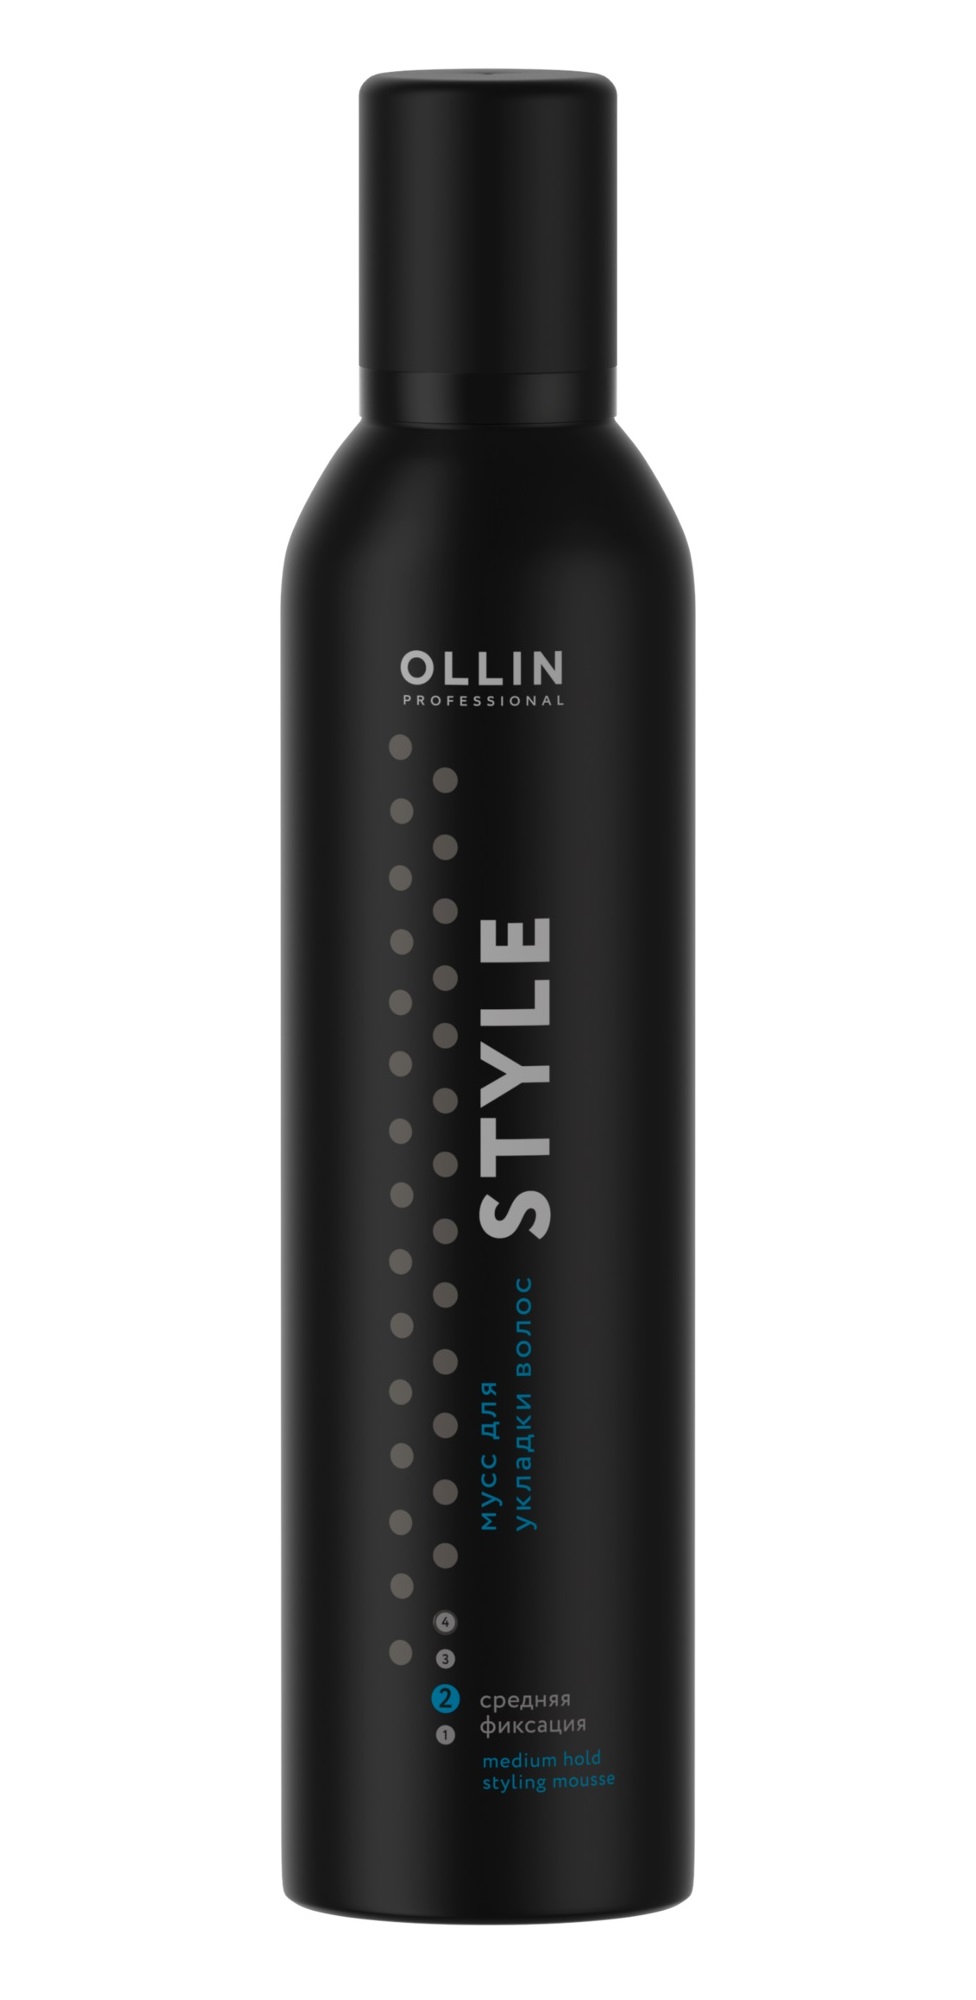 Ollin Professional Мусс для укладки волос средней фиксации, 250 мл (Ollin Professional, Style) ollin professional мусс для укладки волос средней фиксации 250 мл ollin professional style